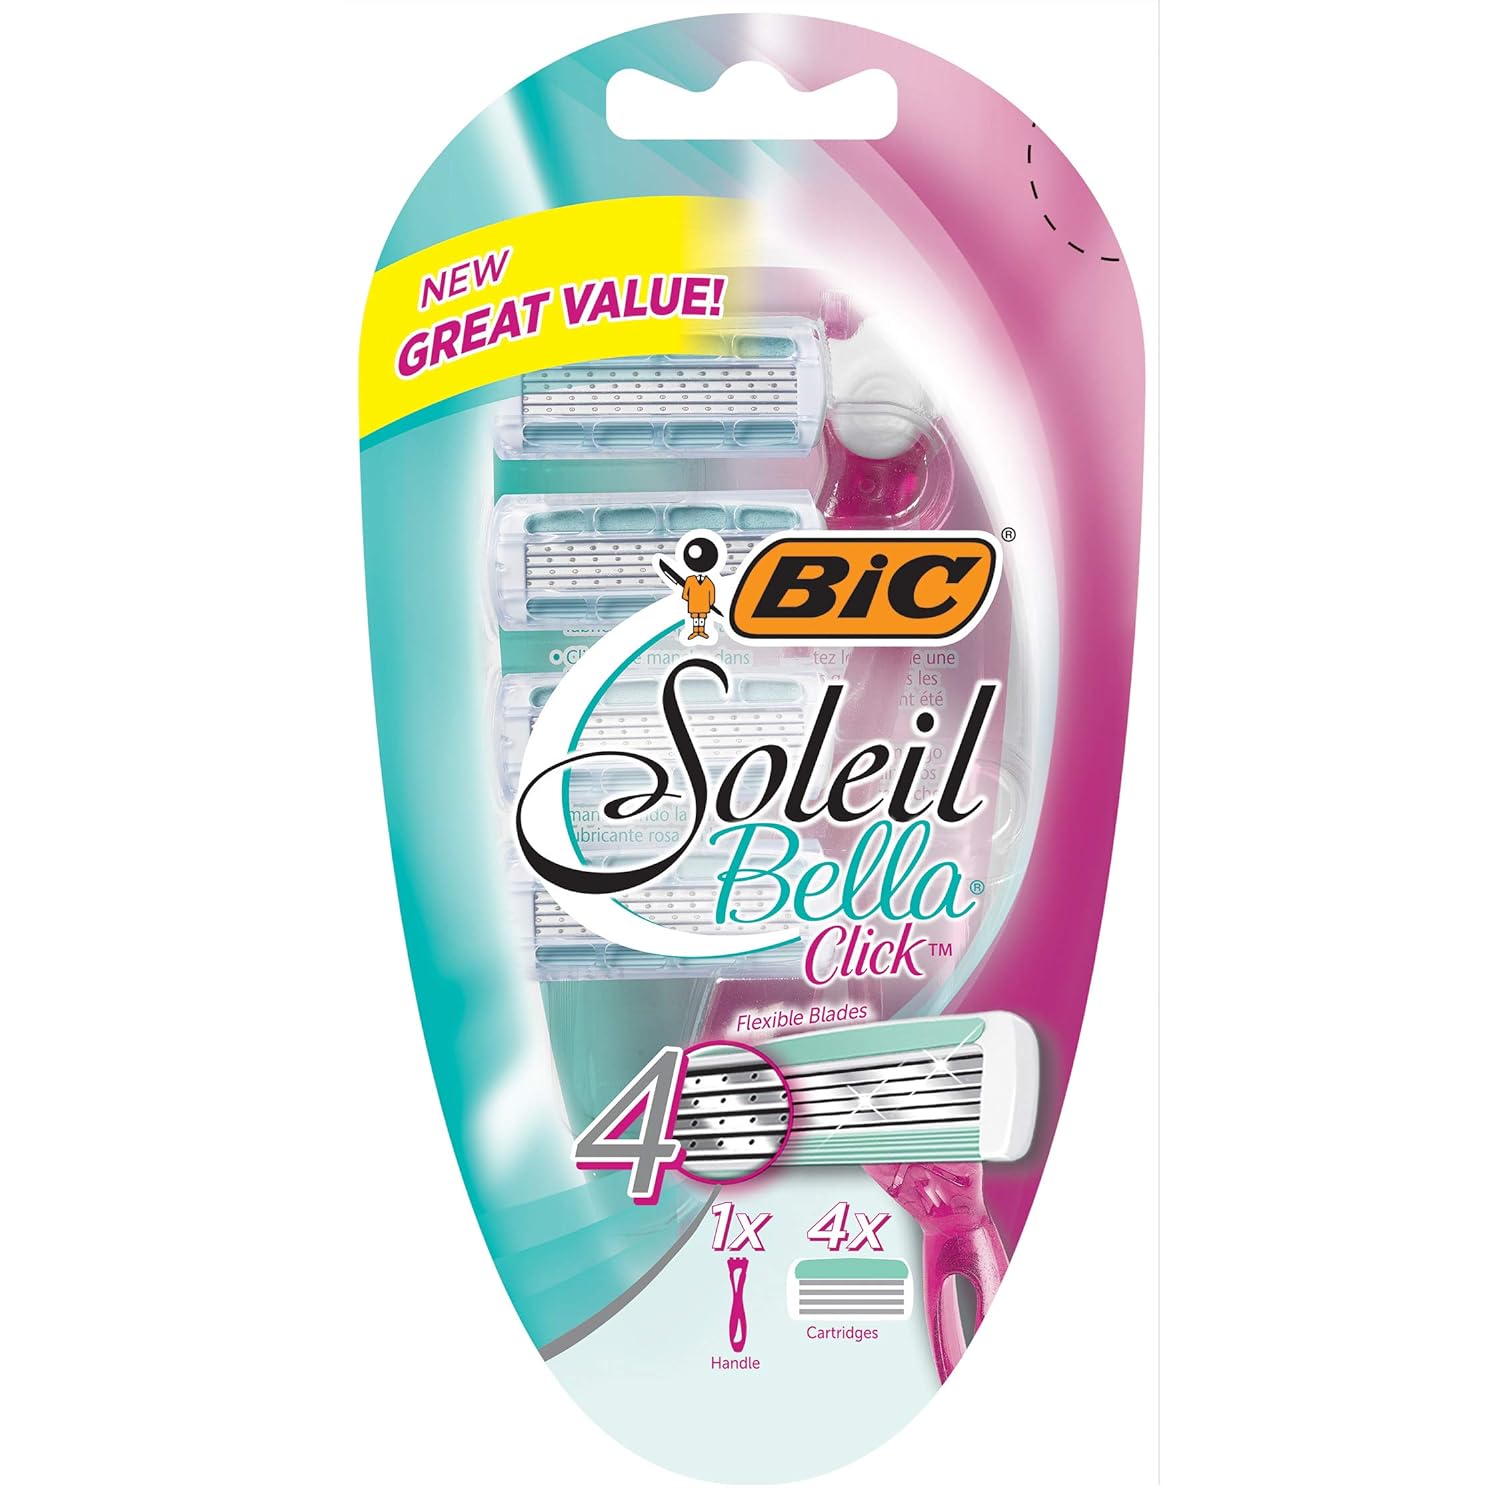 BIC Soleil Bella Click Women' 4-Blade Disposable Razor, 1 Handle and 4 Cartridges